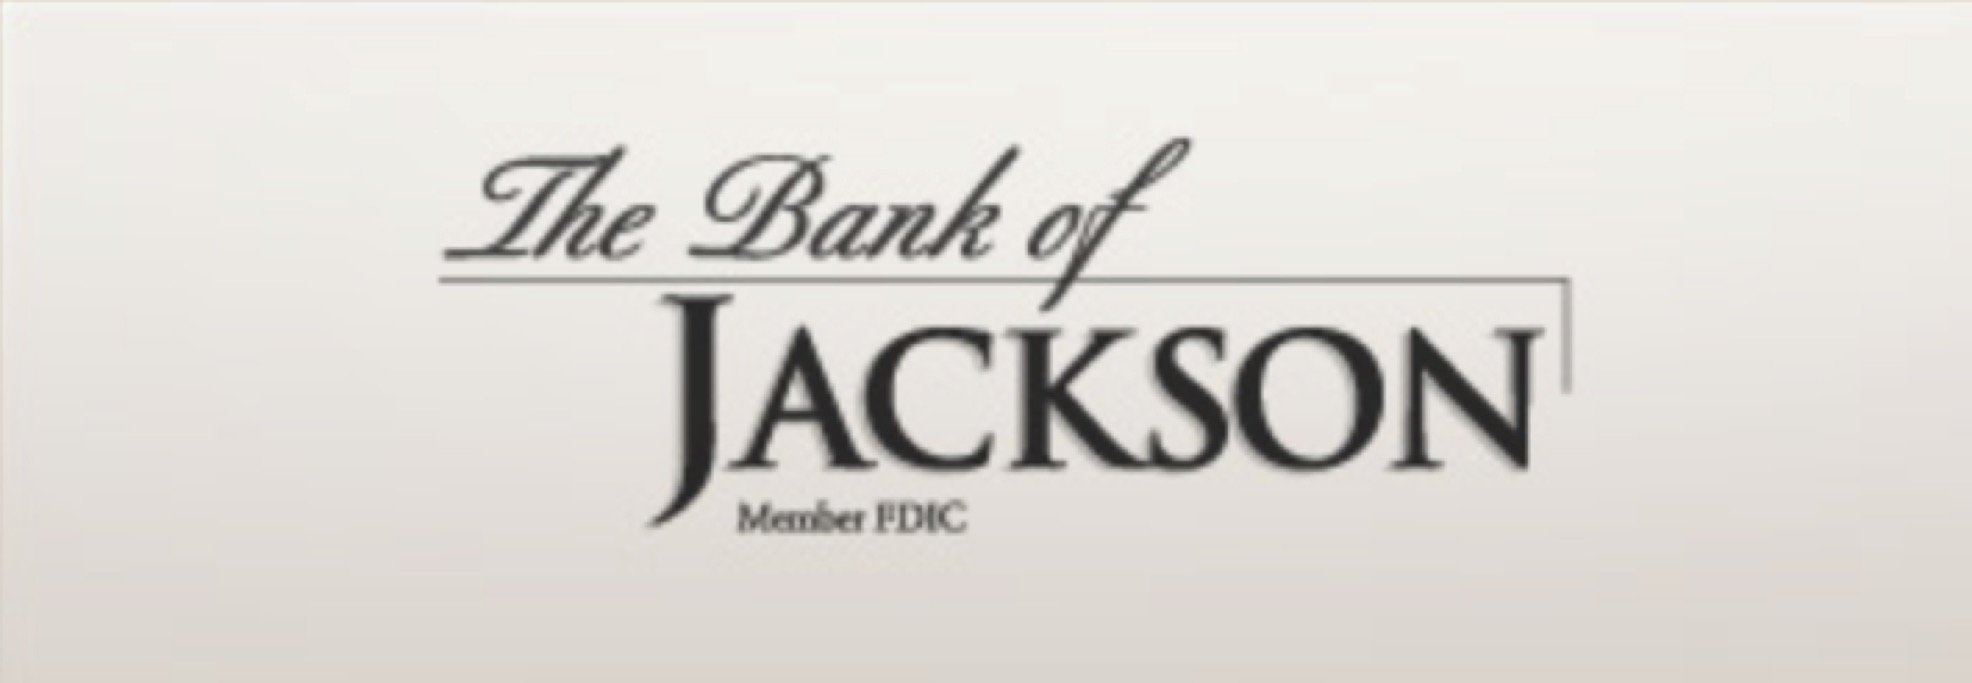 Bank Of Jackson.jpg